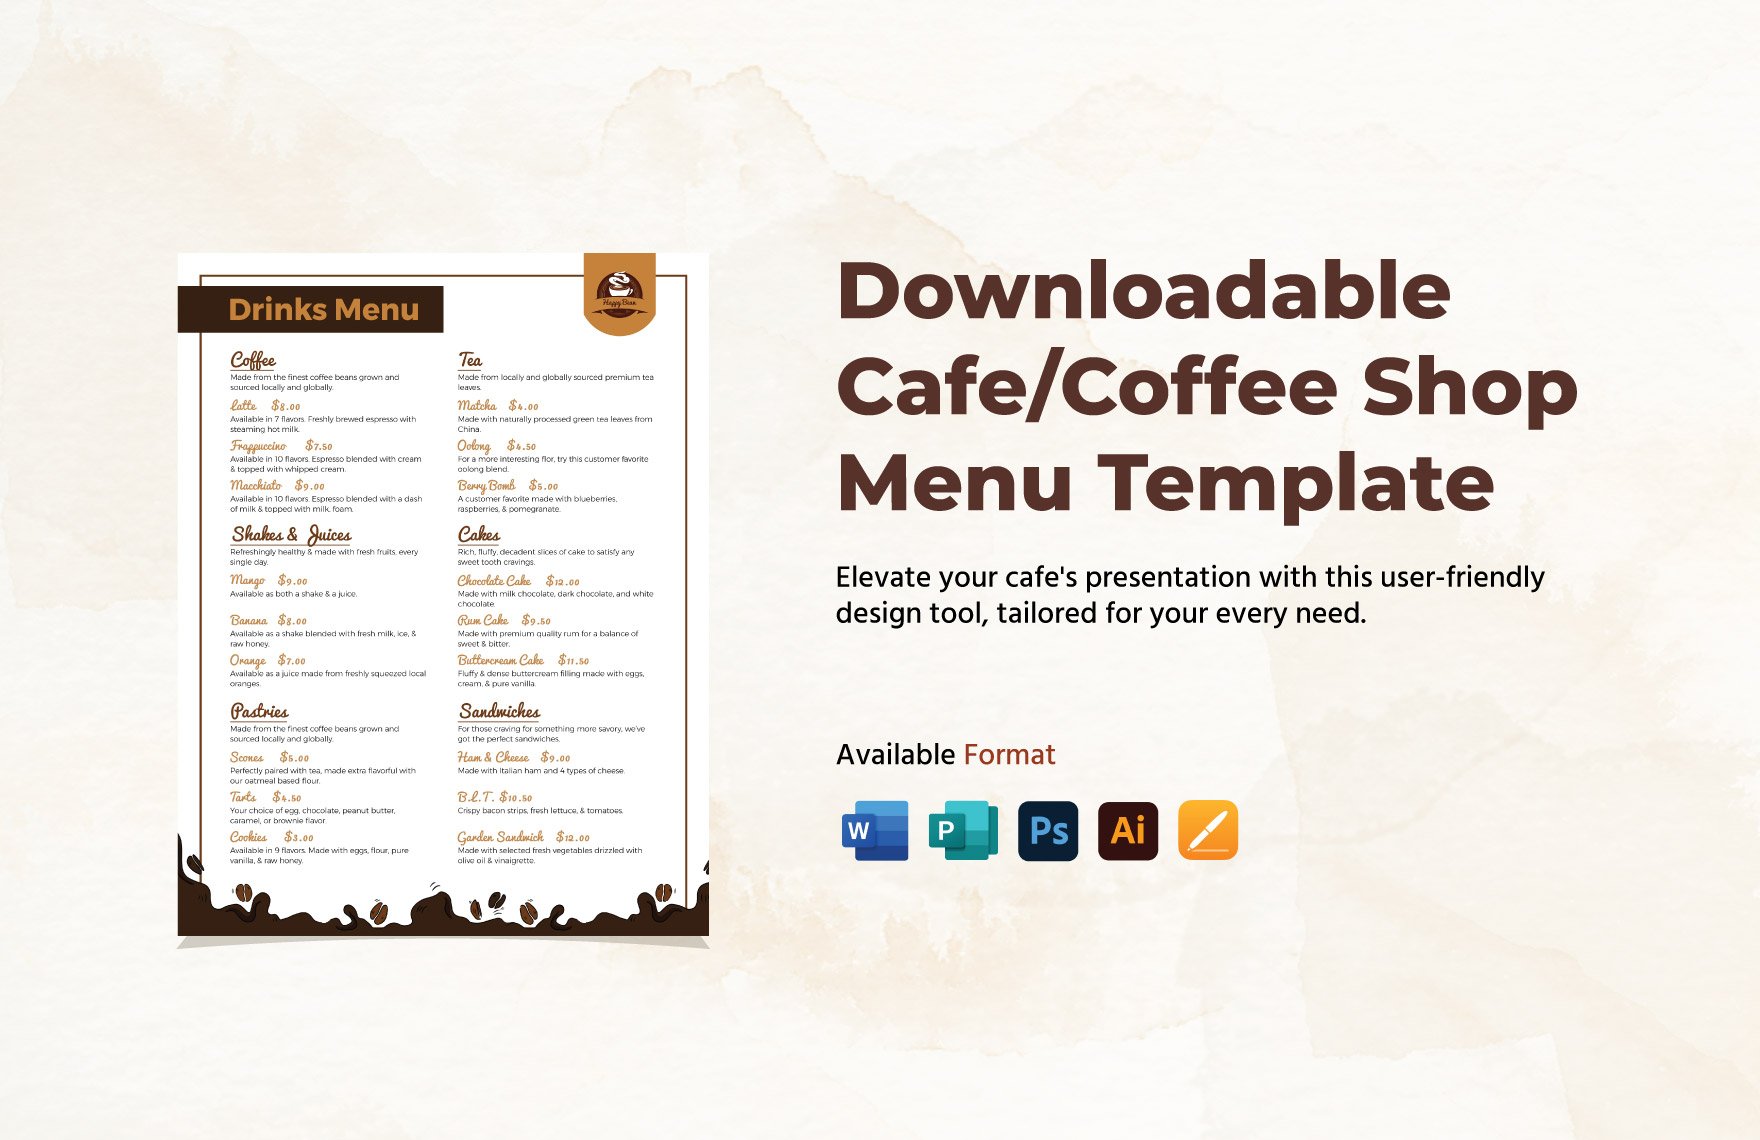 Downloadable Cafe-Coffee Shop Menu Template